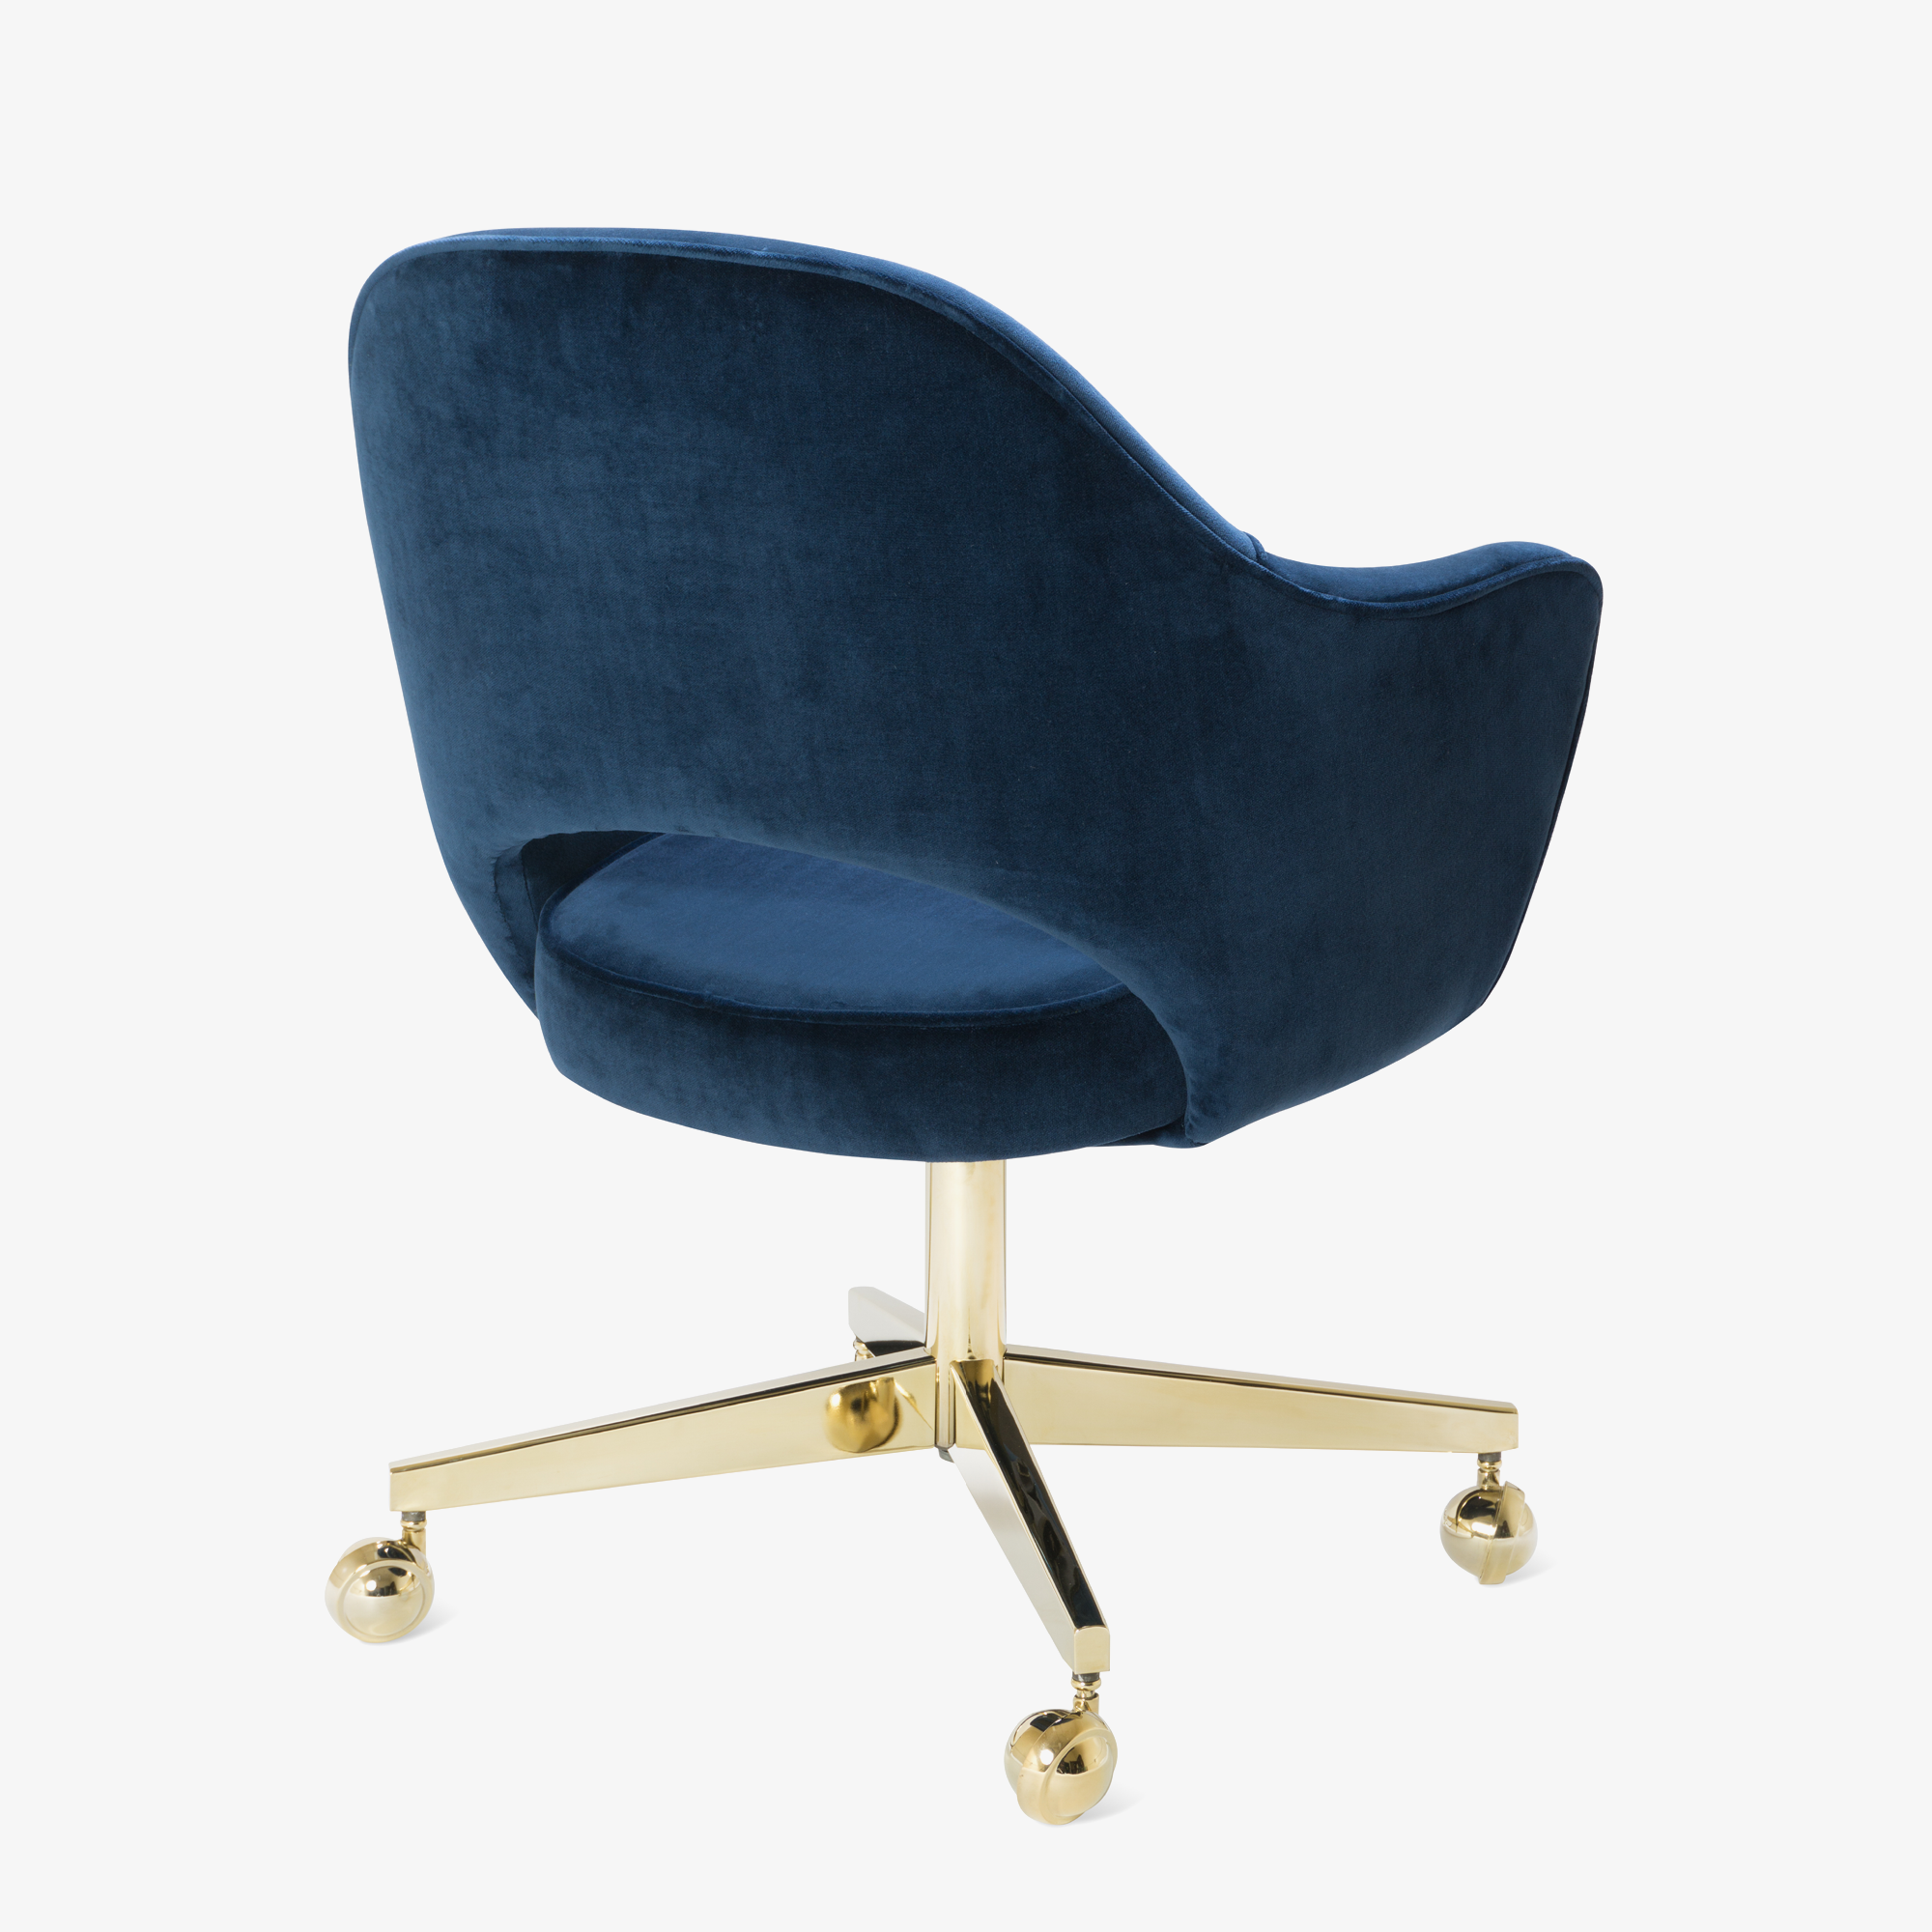 Saarinen Executive Arm Chair in Navy Velvet, Swivel Base, 24k Gold Edition5.png